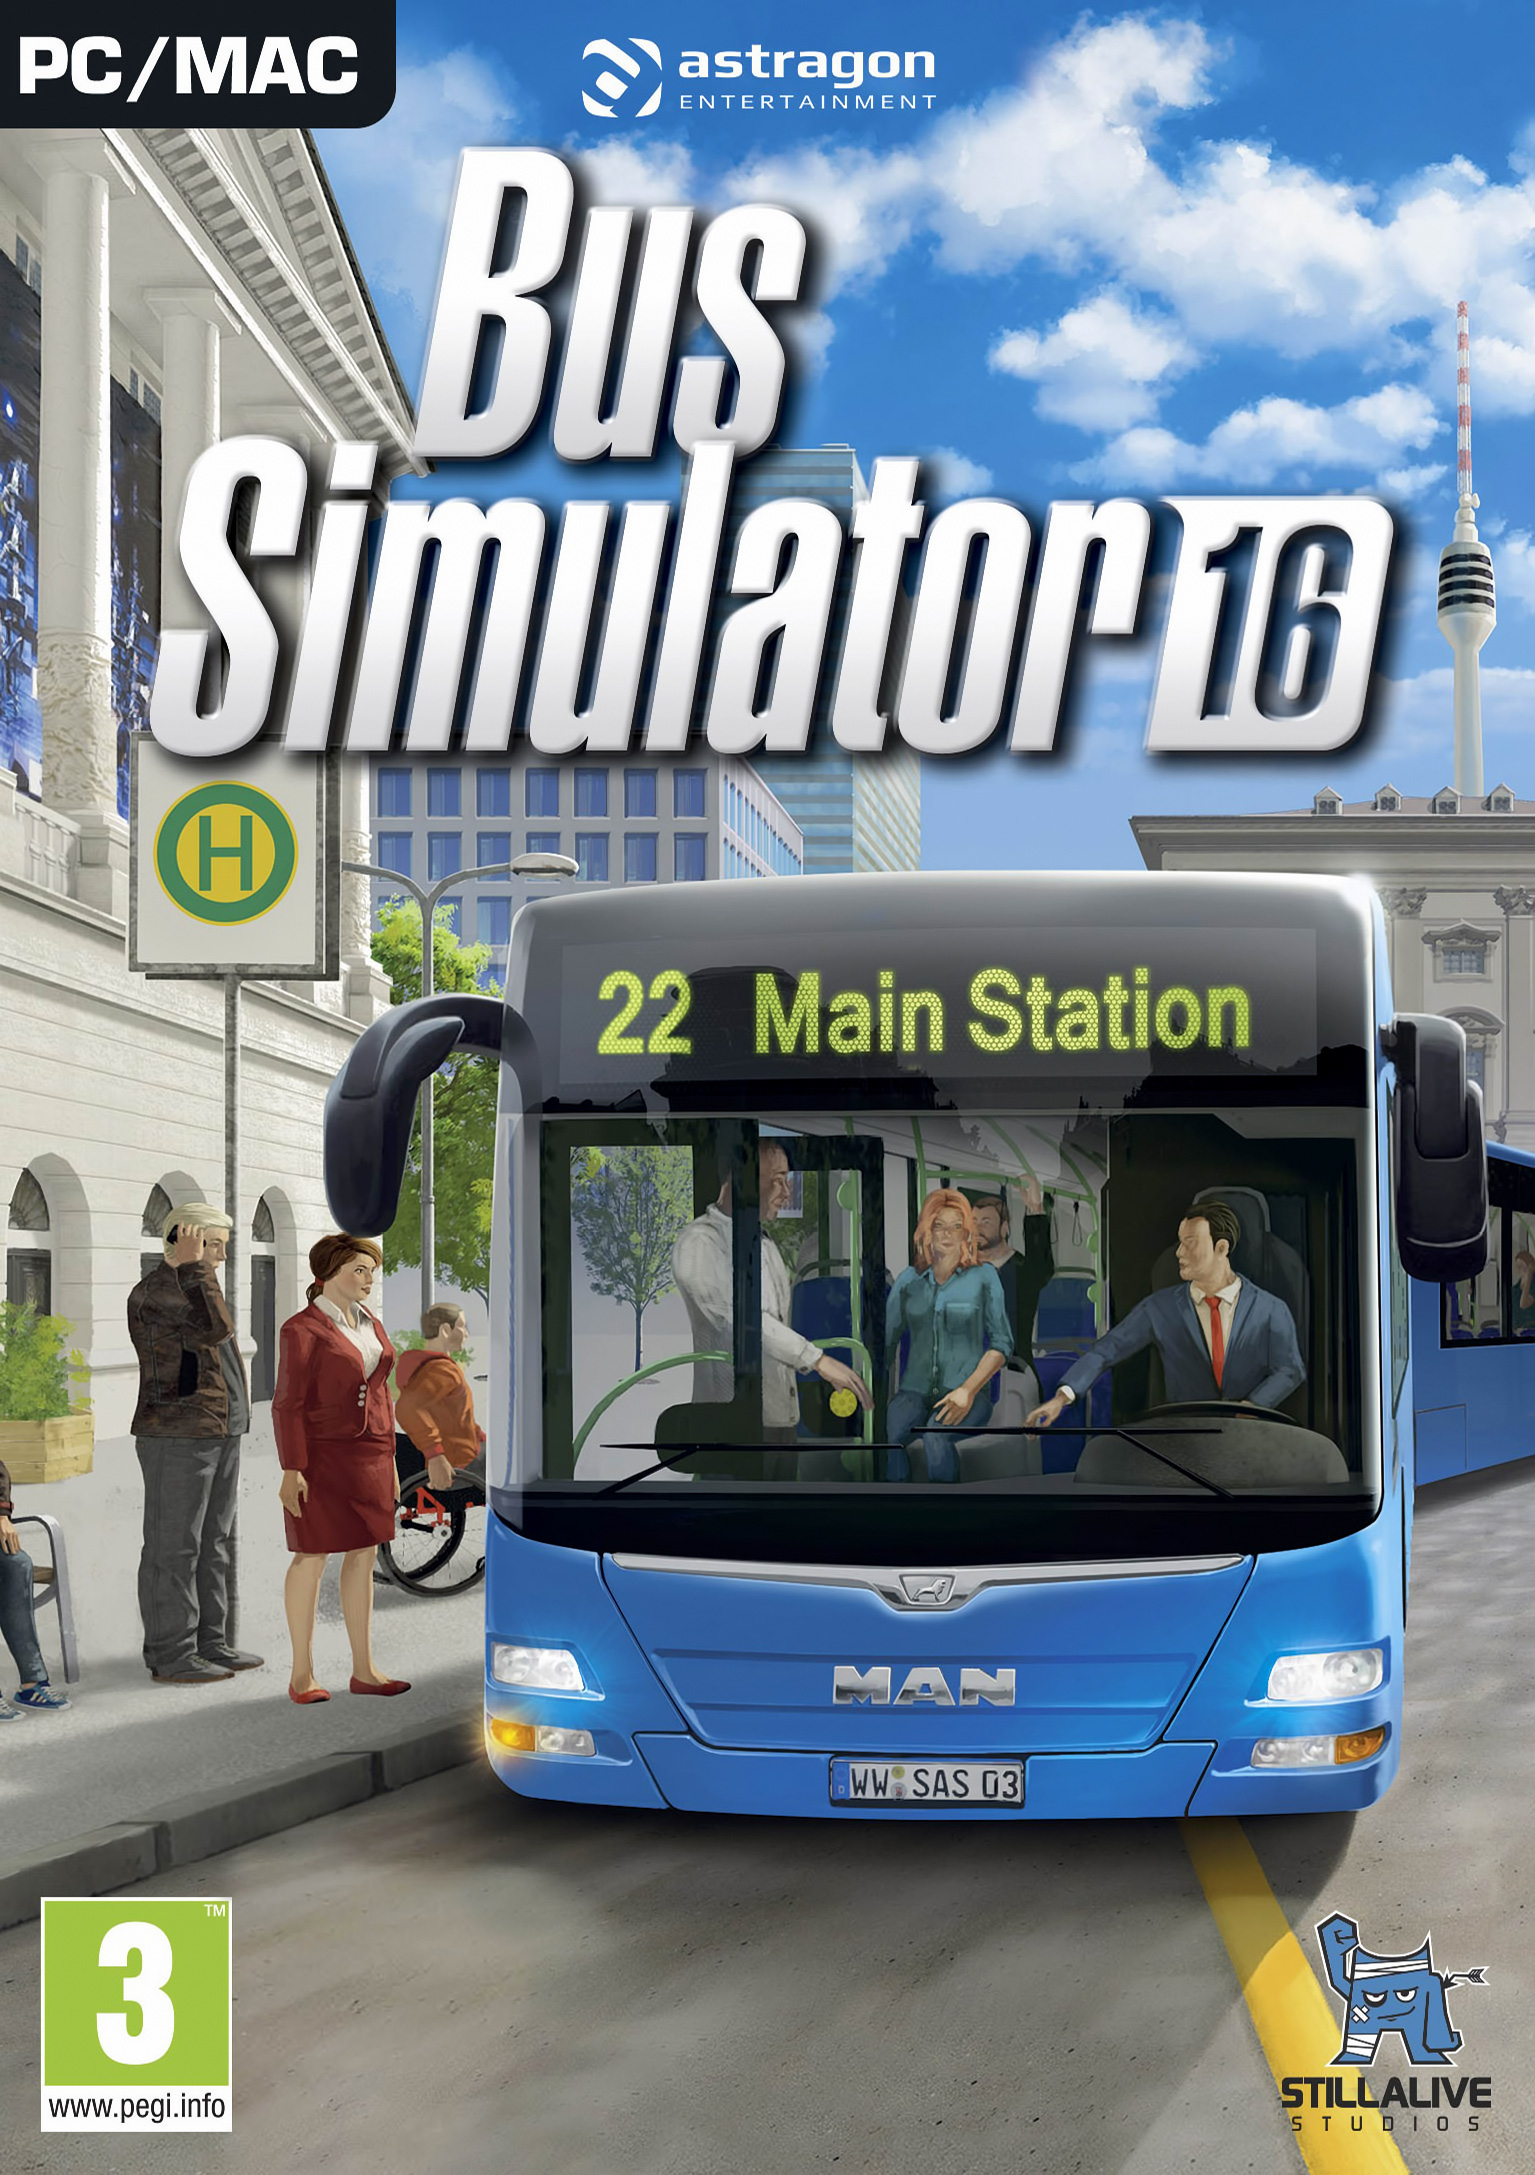 Bus Simulator 16 - pedn DVD obal